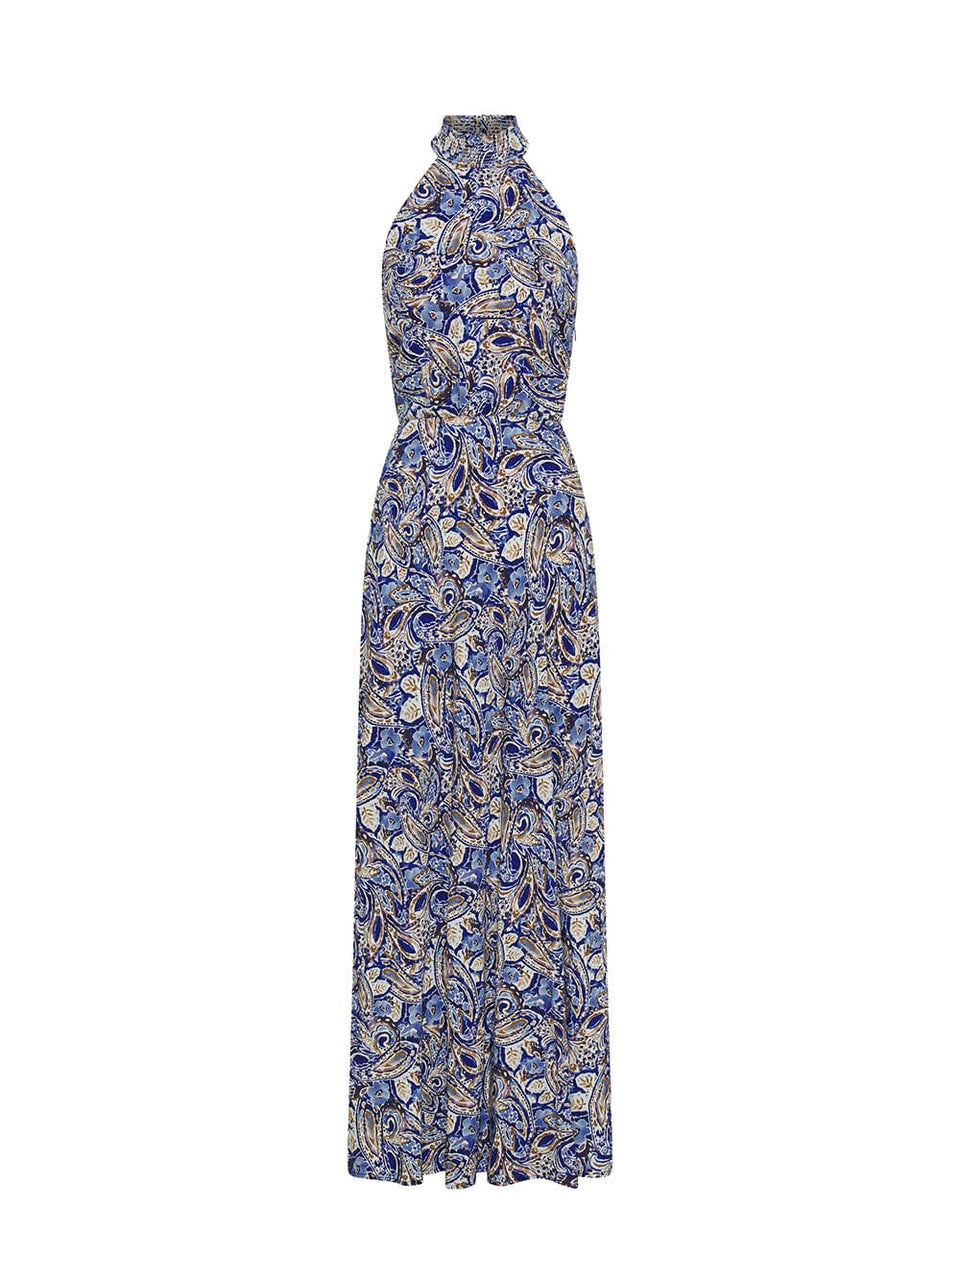 Dakota Halter Maxi Dress KIVARI | Blue paisley halter dress back view